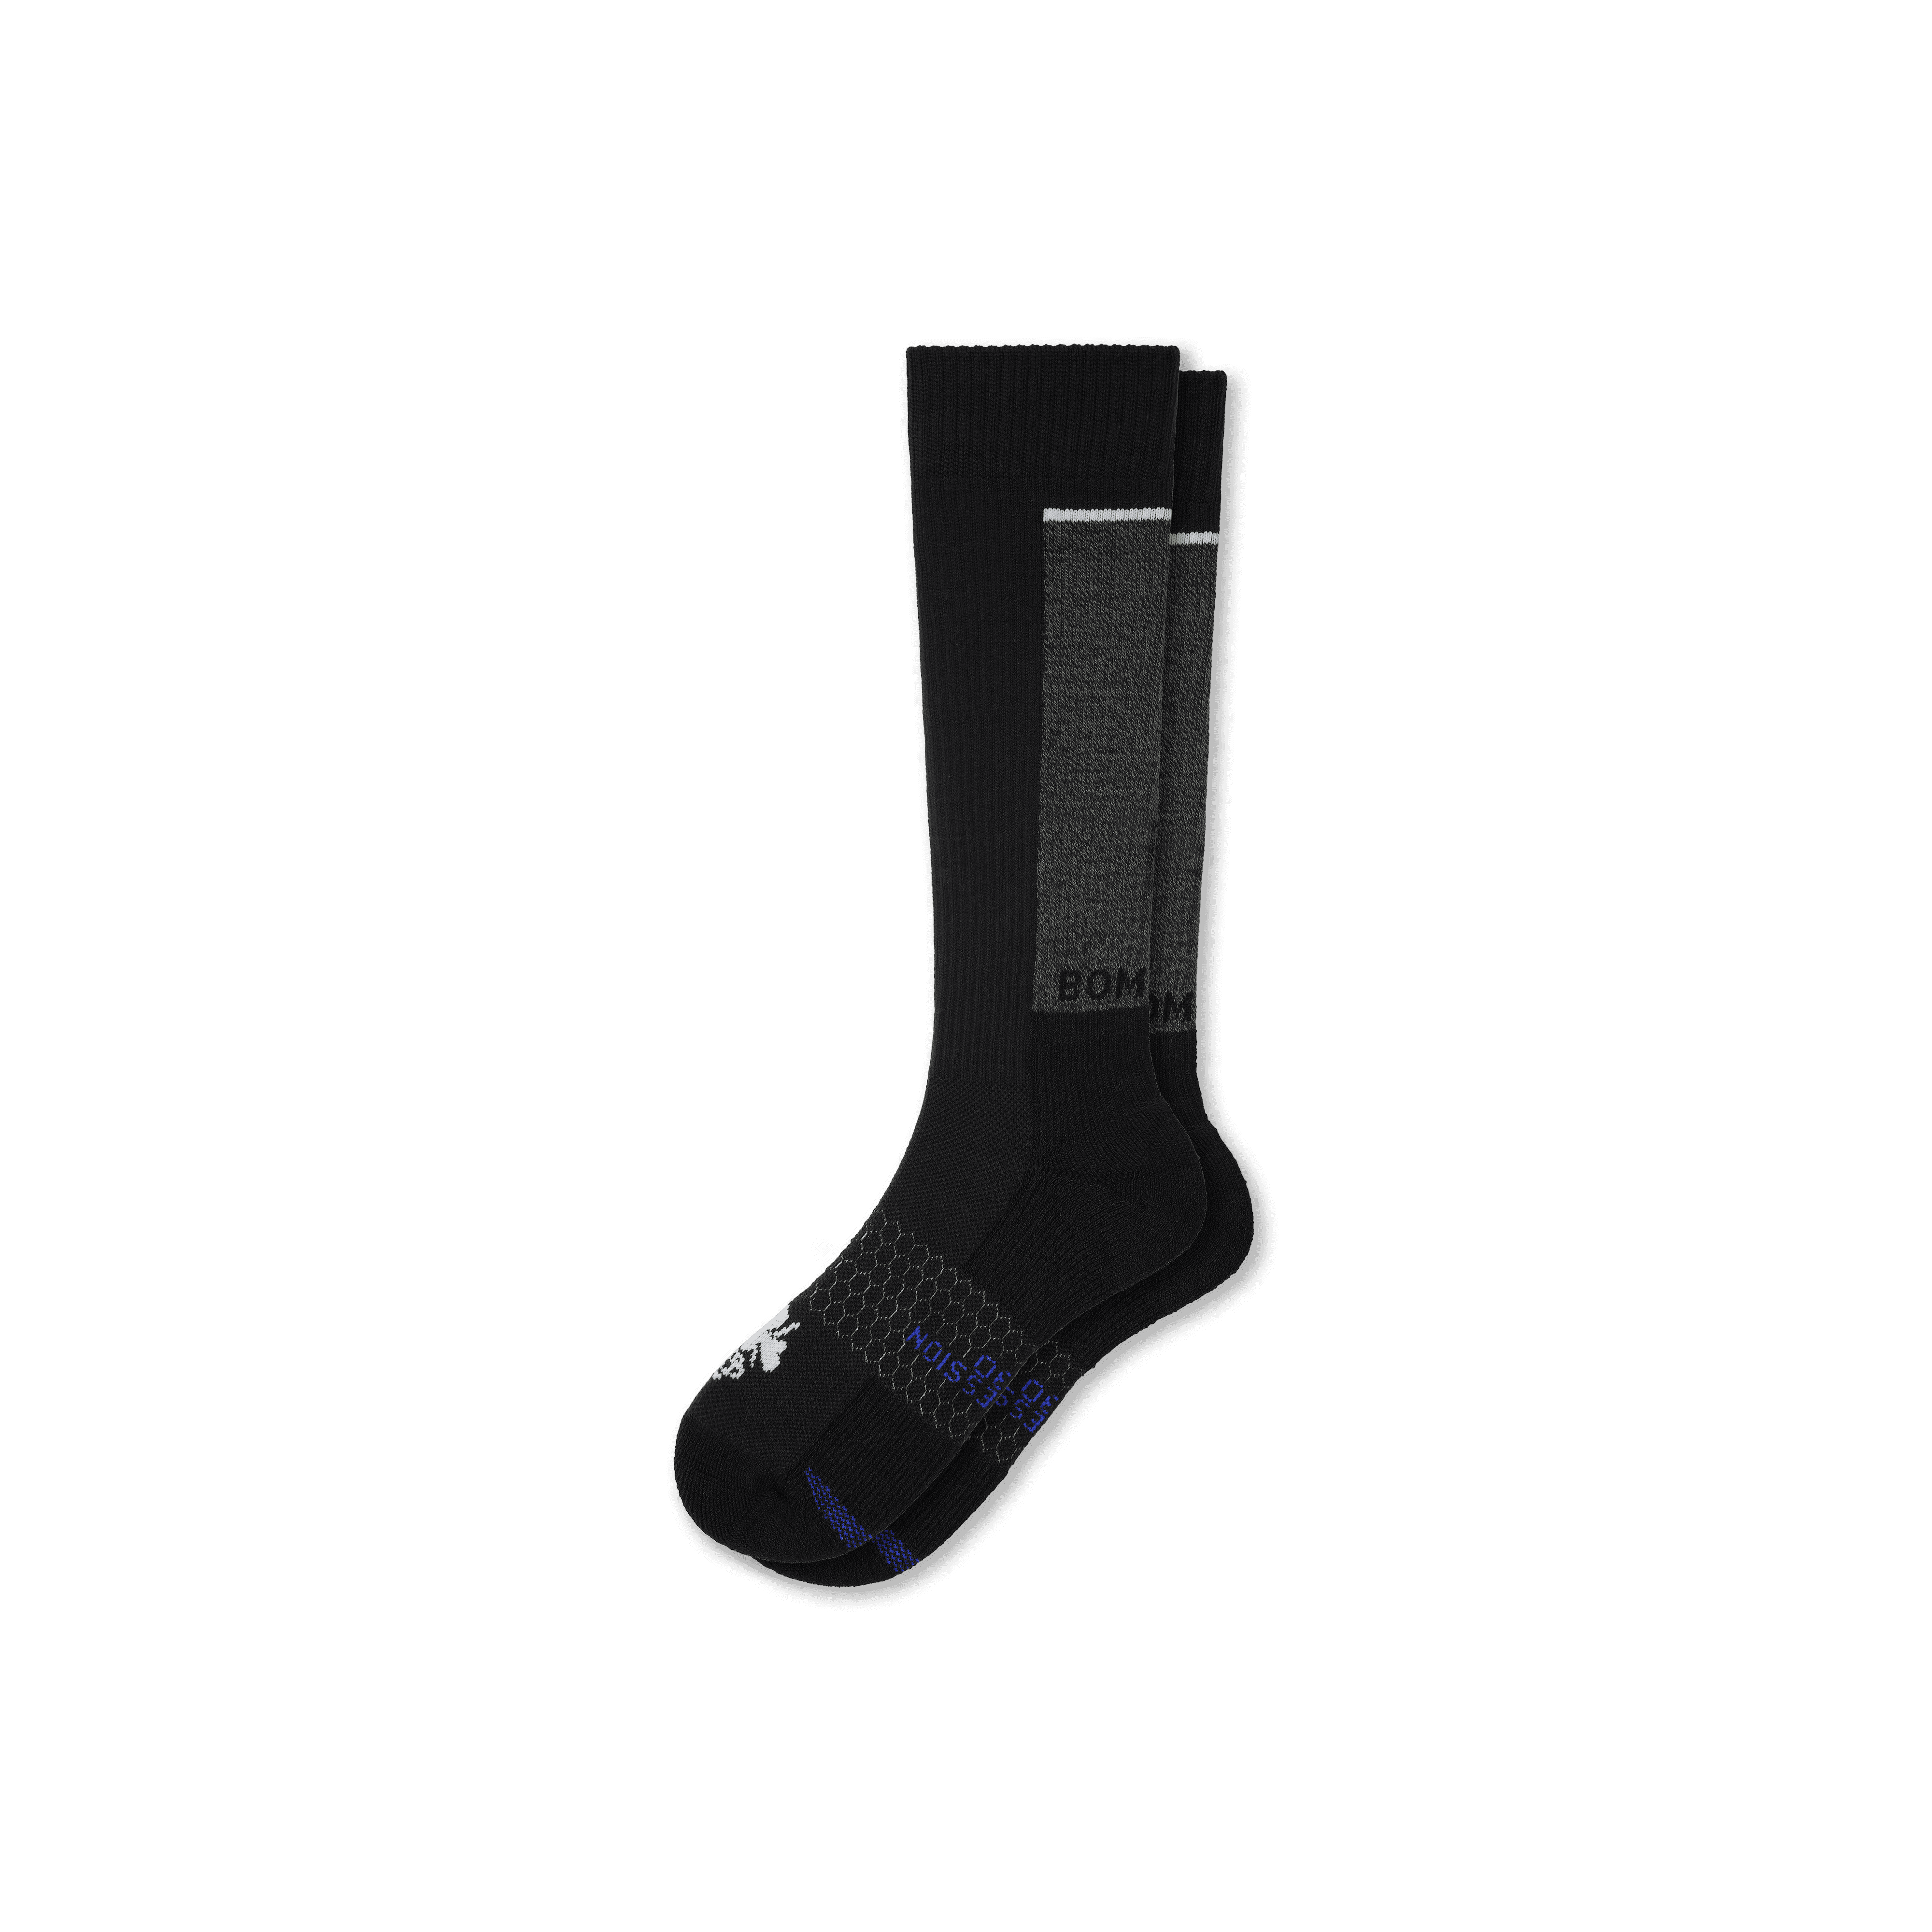 Bombas Performance Compression Socks (20-30mmhg) In Black